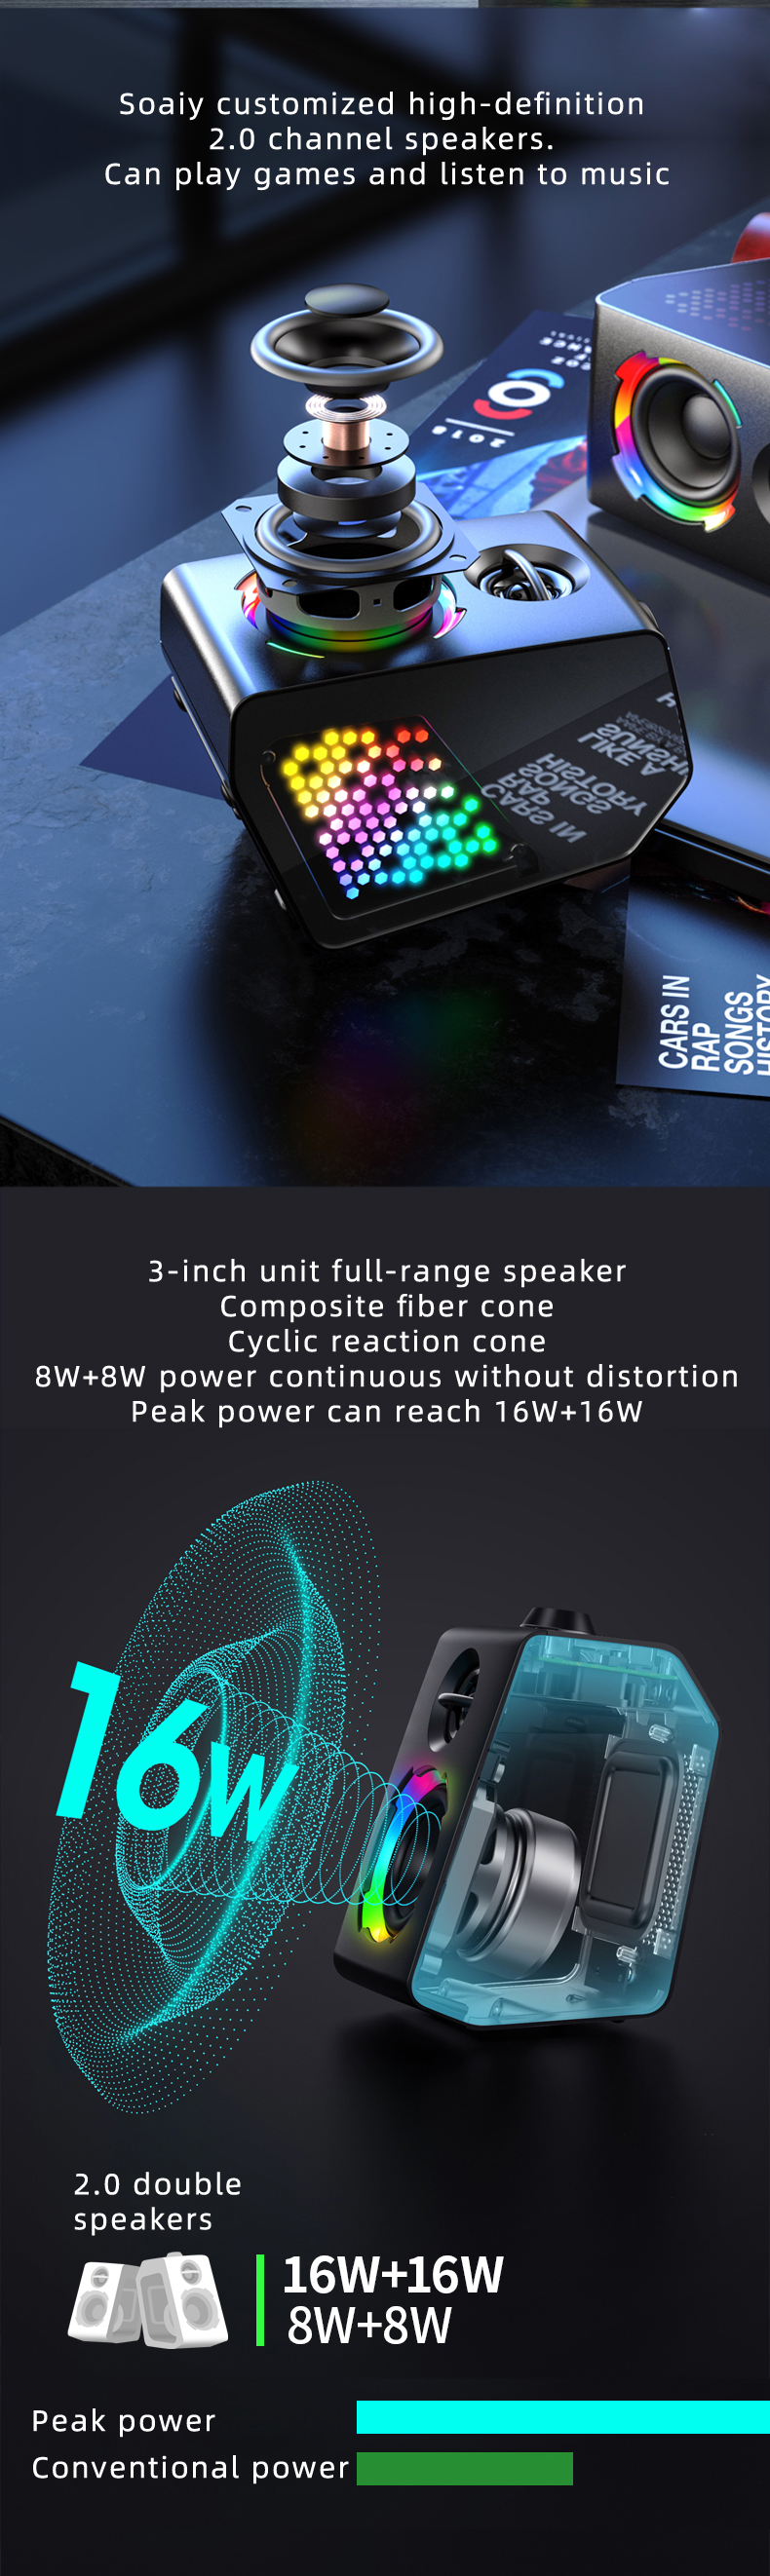 SOAIY-SH20-bluetooth-Speaker-RGB-Lighting-Game-Desktop-Dual-Speaker-Surround-Bass-Stereo-Support-USB-1892347-4